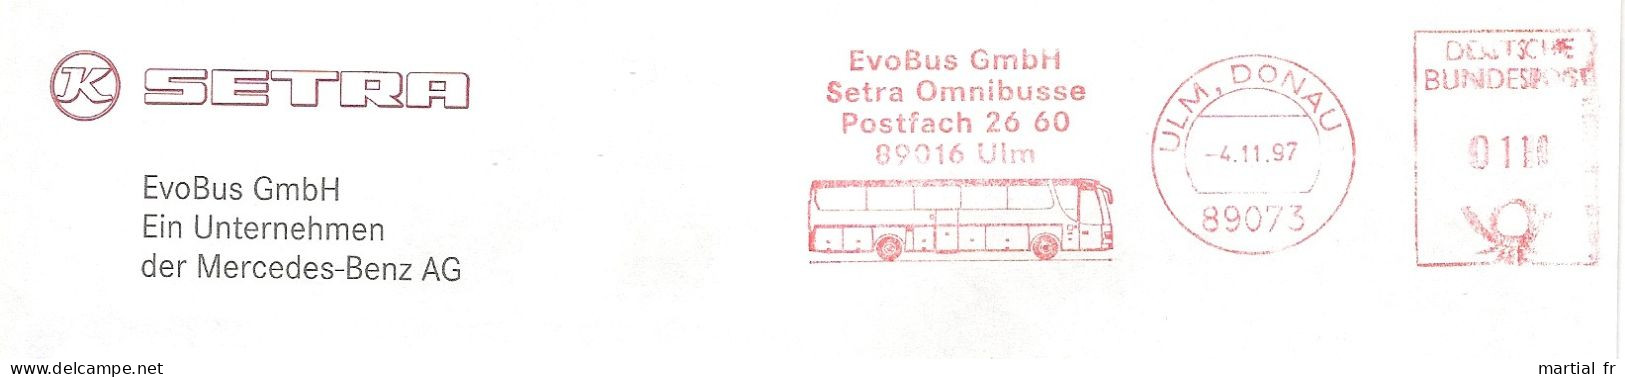 EMA RED METER STAMP FREISTEMPEL ALLEMAGNE BUS TRANSPORT AUTOBUS OMNIBUS EVOBUS ULM DAIMLER BENZ Donau 89073 - Bussen